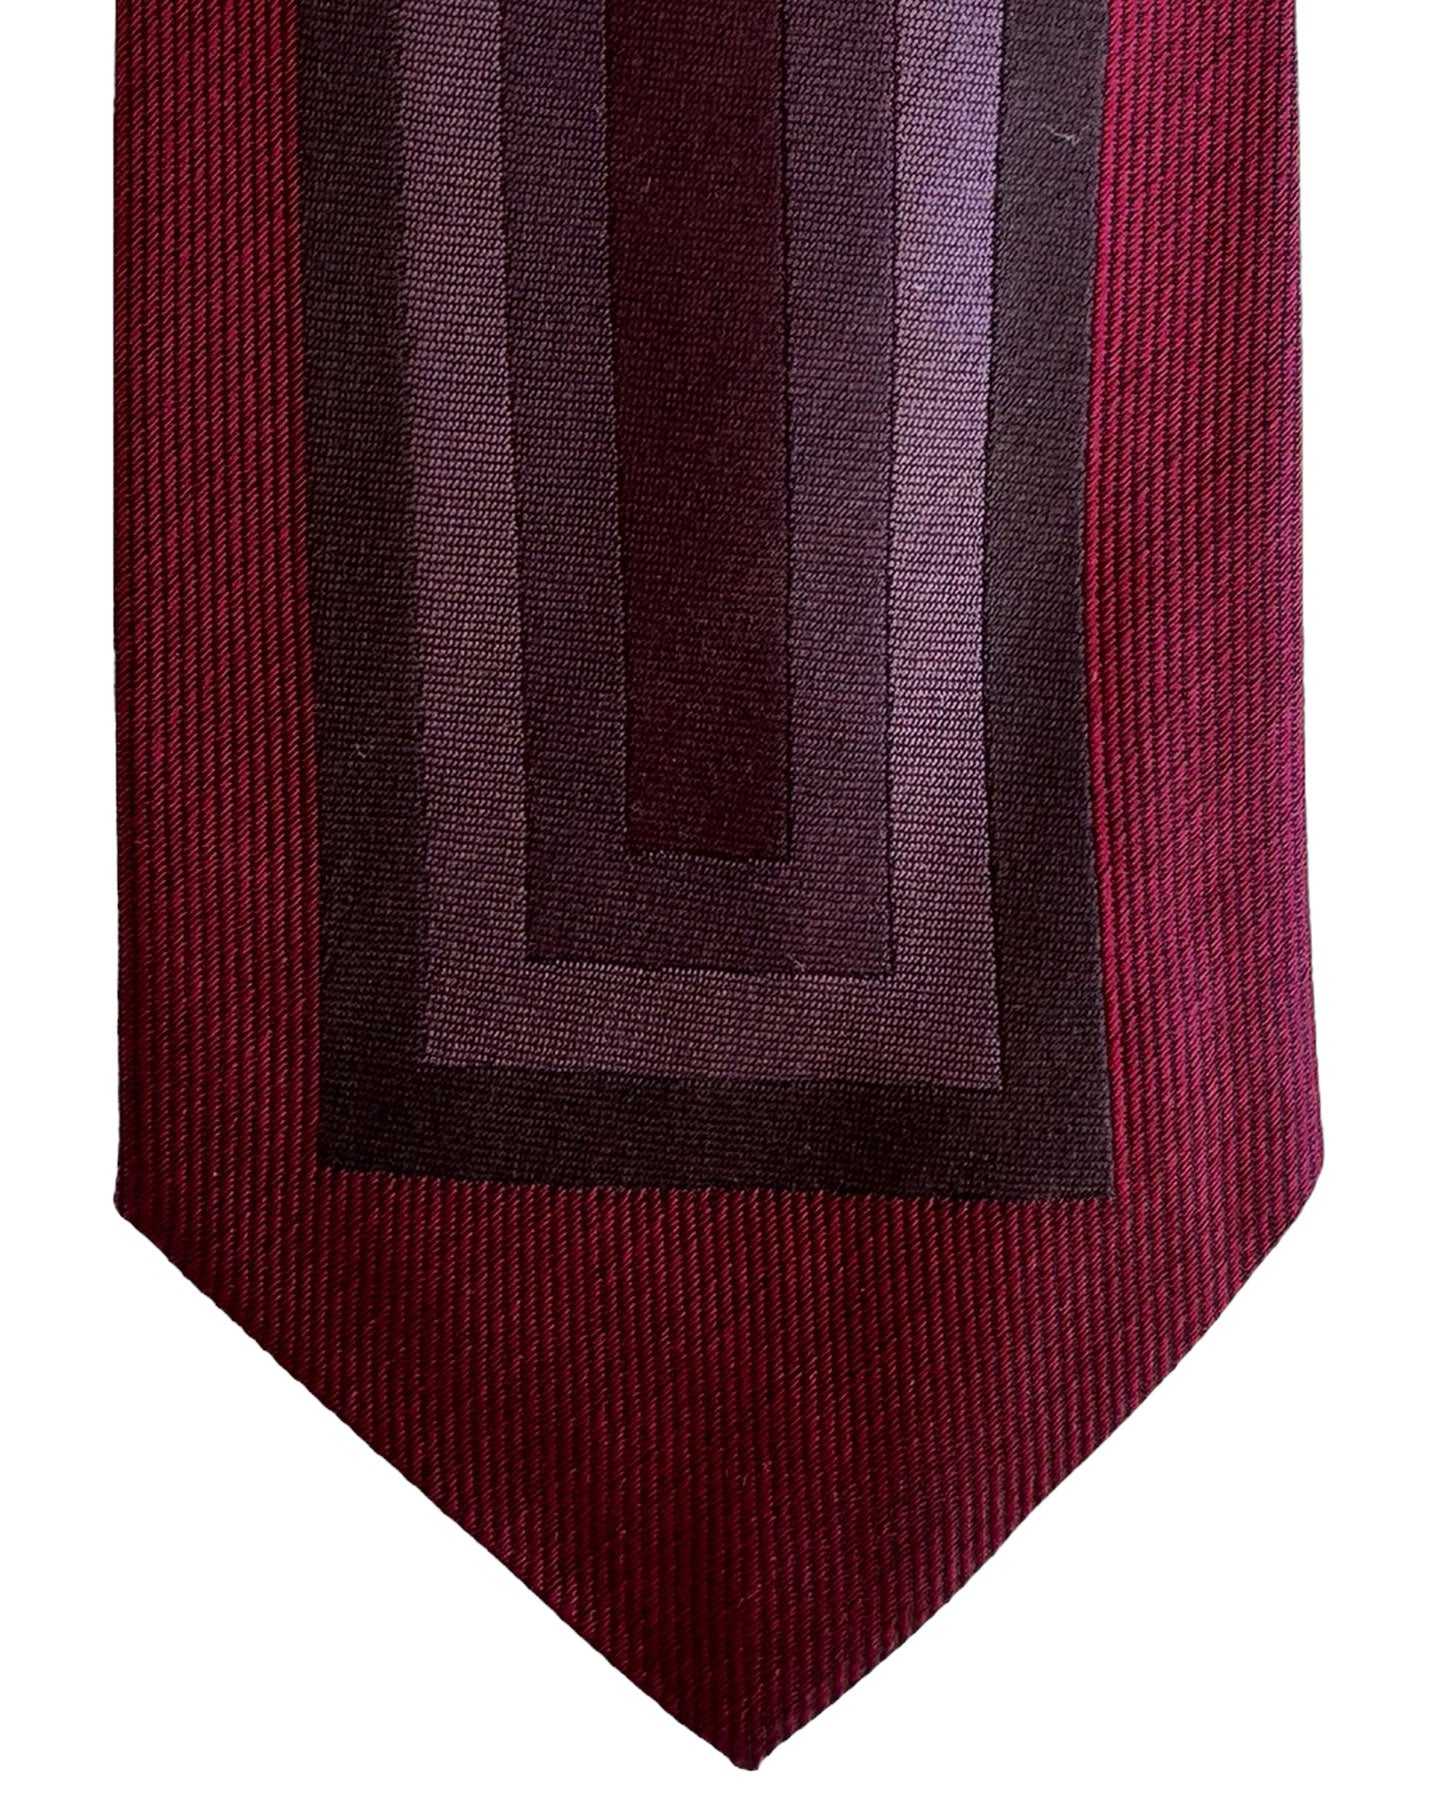 Gene Meyer Tie Maroon Purple Design - Hand Made in Italy